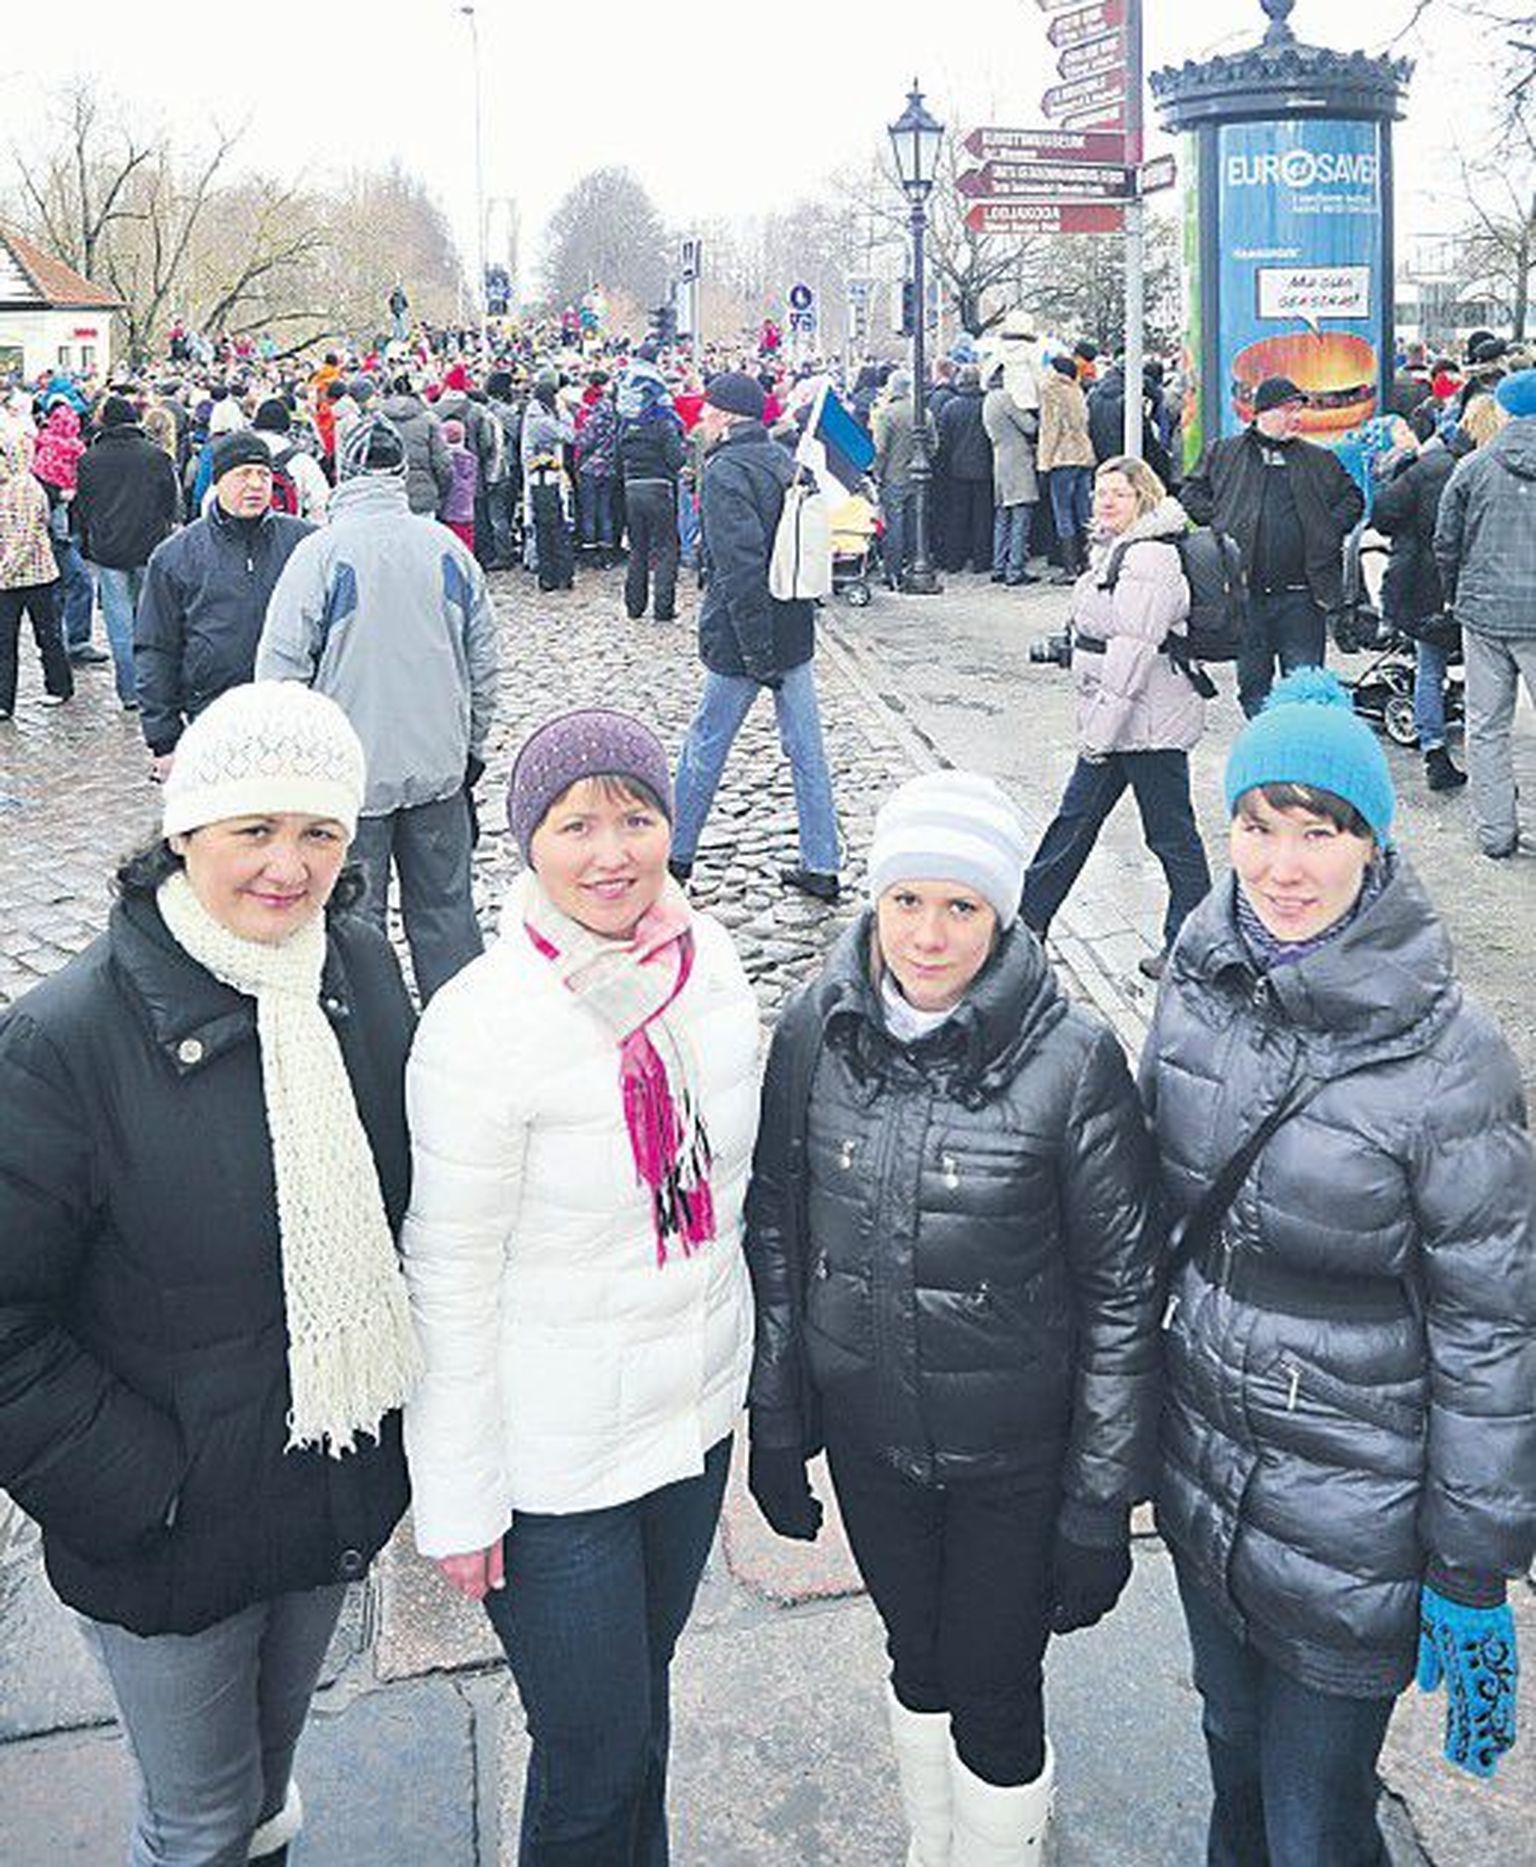 В Эстонии учиться хорошо, но сердце зовет на родину — к семье и друзьям. На фото (слева направо) Анна Байдуллина, Елена Рябина, Ольга Трошкина и Наталия Баталова.